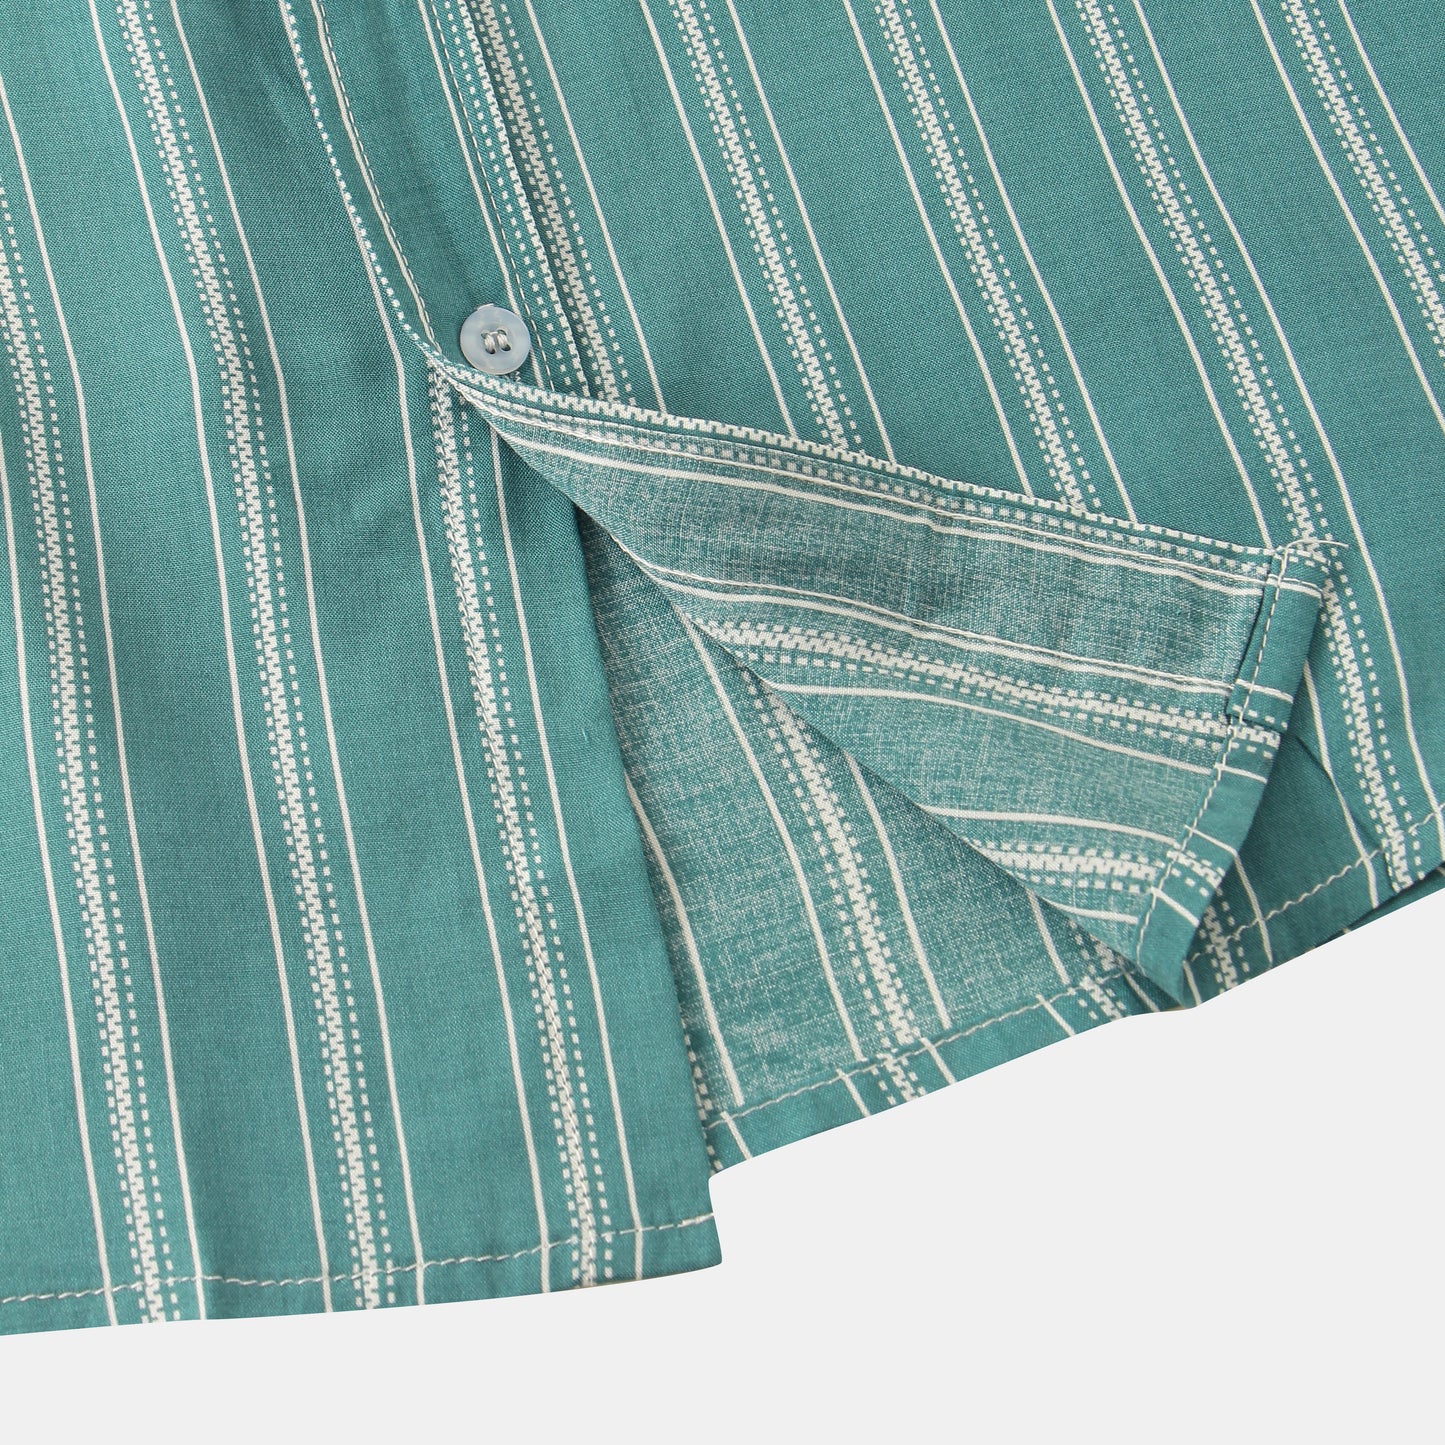 Fashion Stripe Print Lapel Button Short Sleeve Shirt